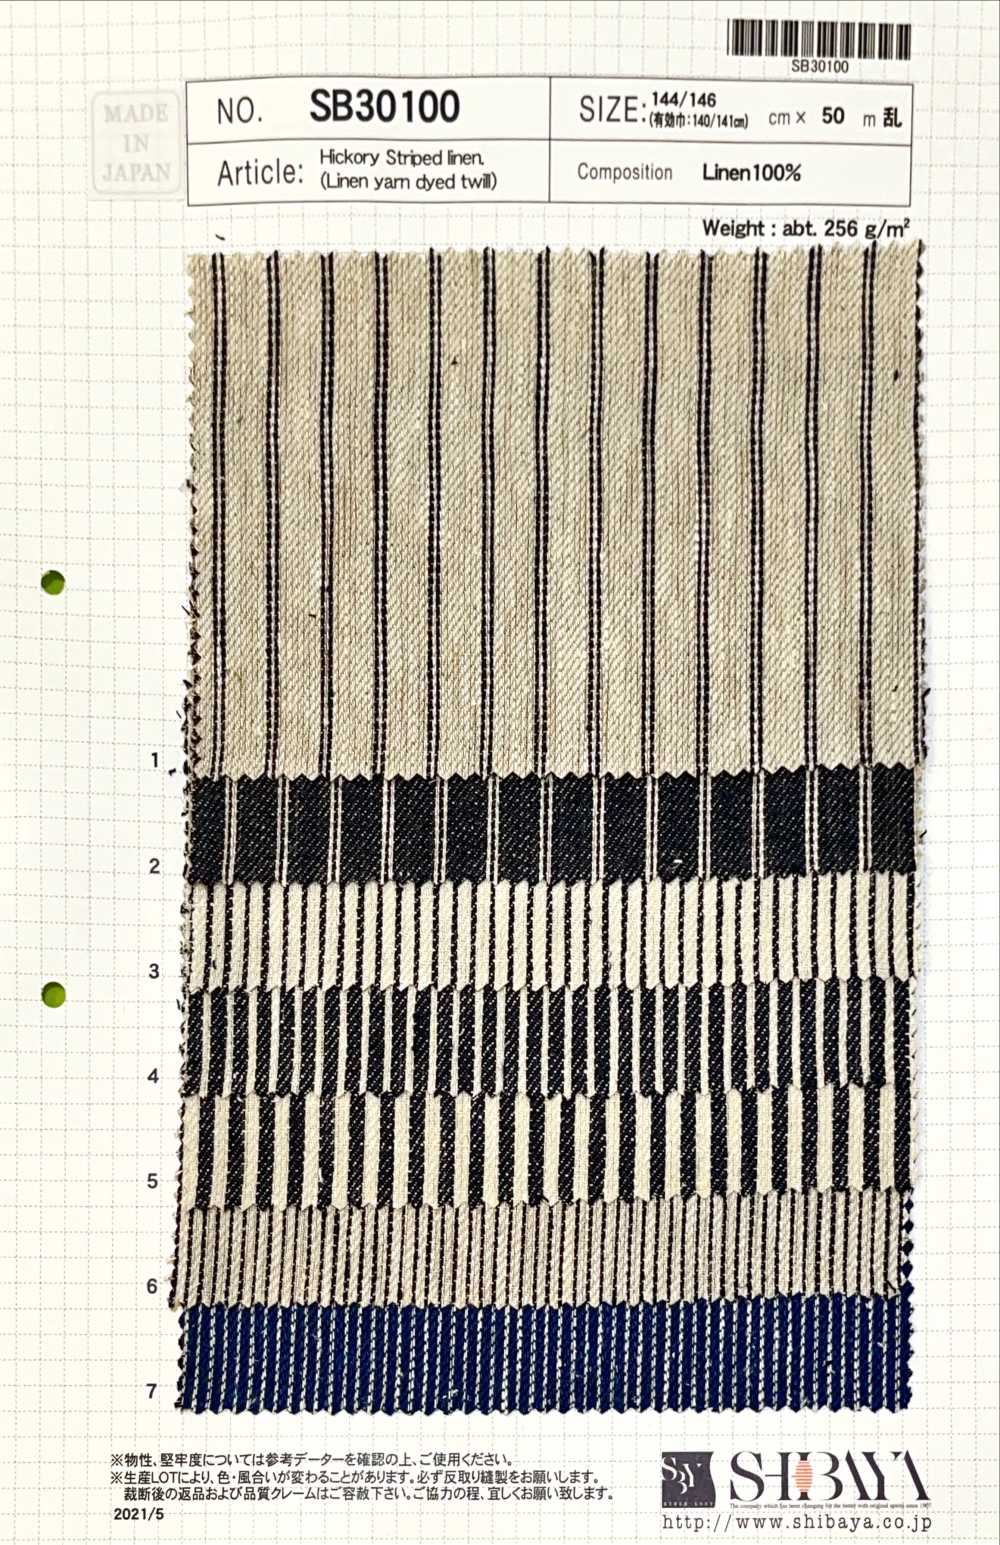 SB30100 Lino A Rayas De Nogal[Fabrica Textil] SHIBAYA